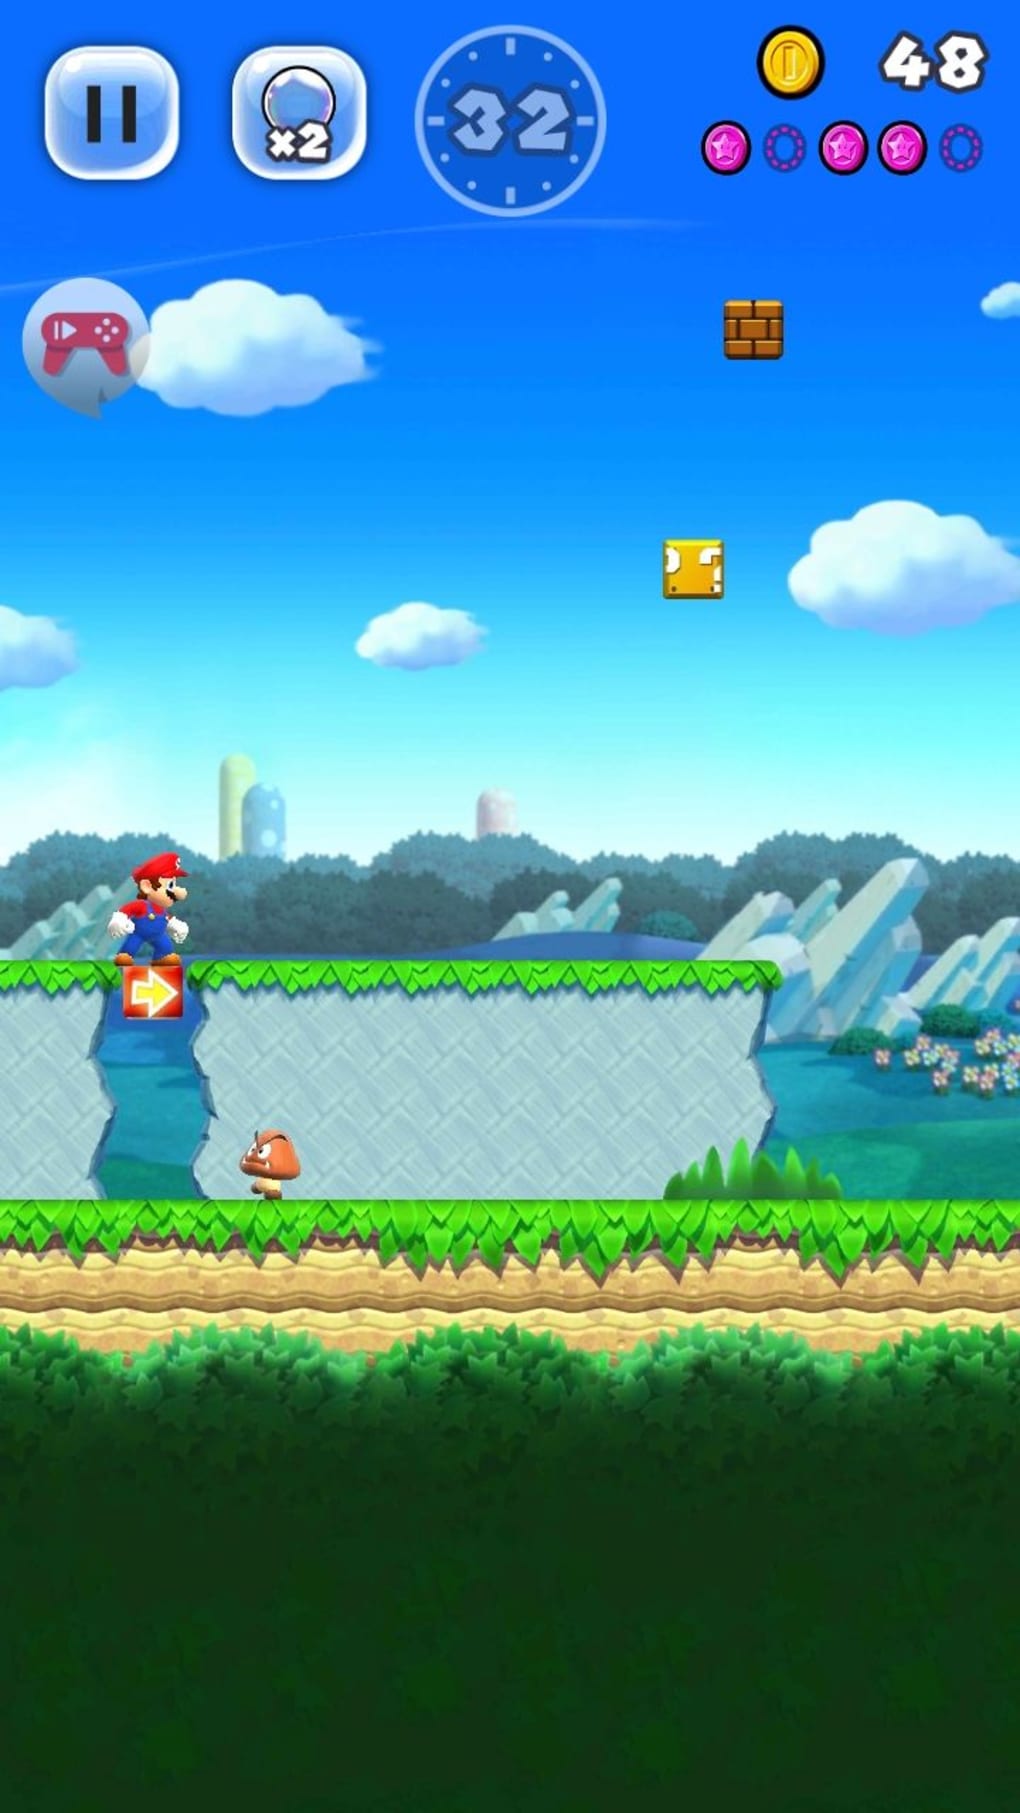 Super Mario Run APK for Android